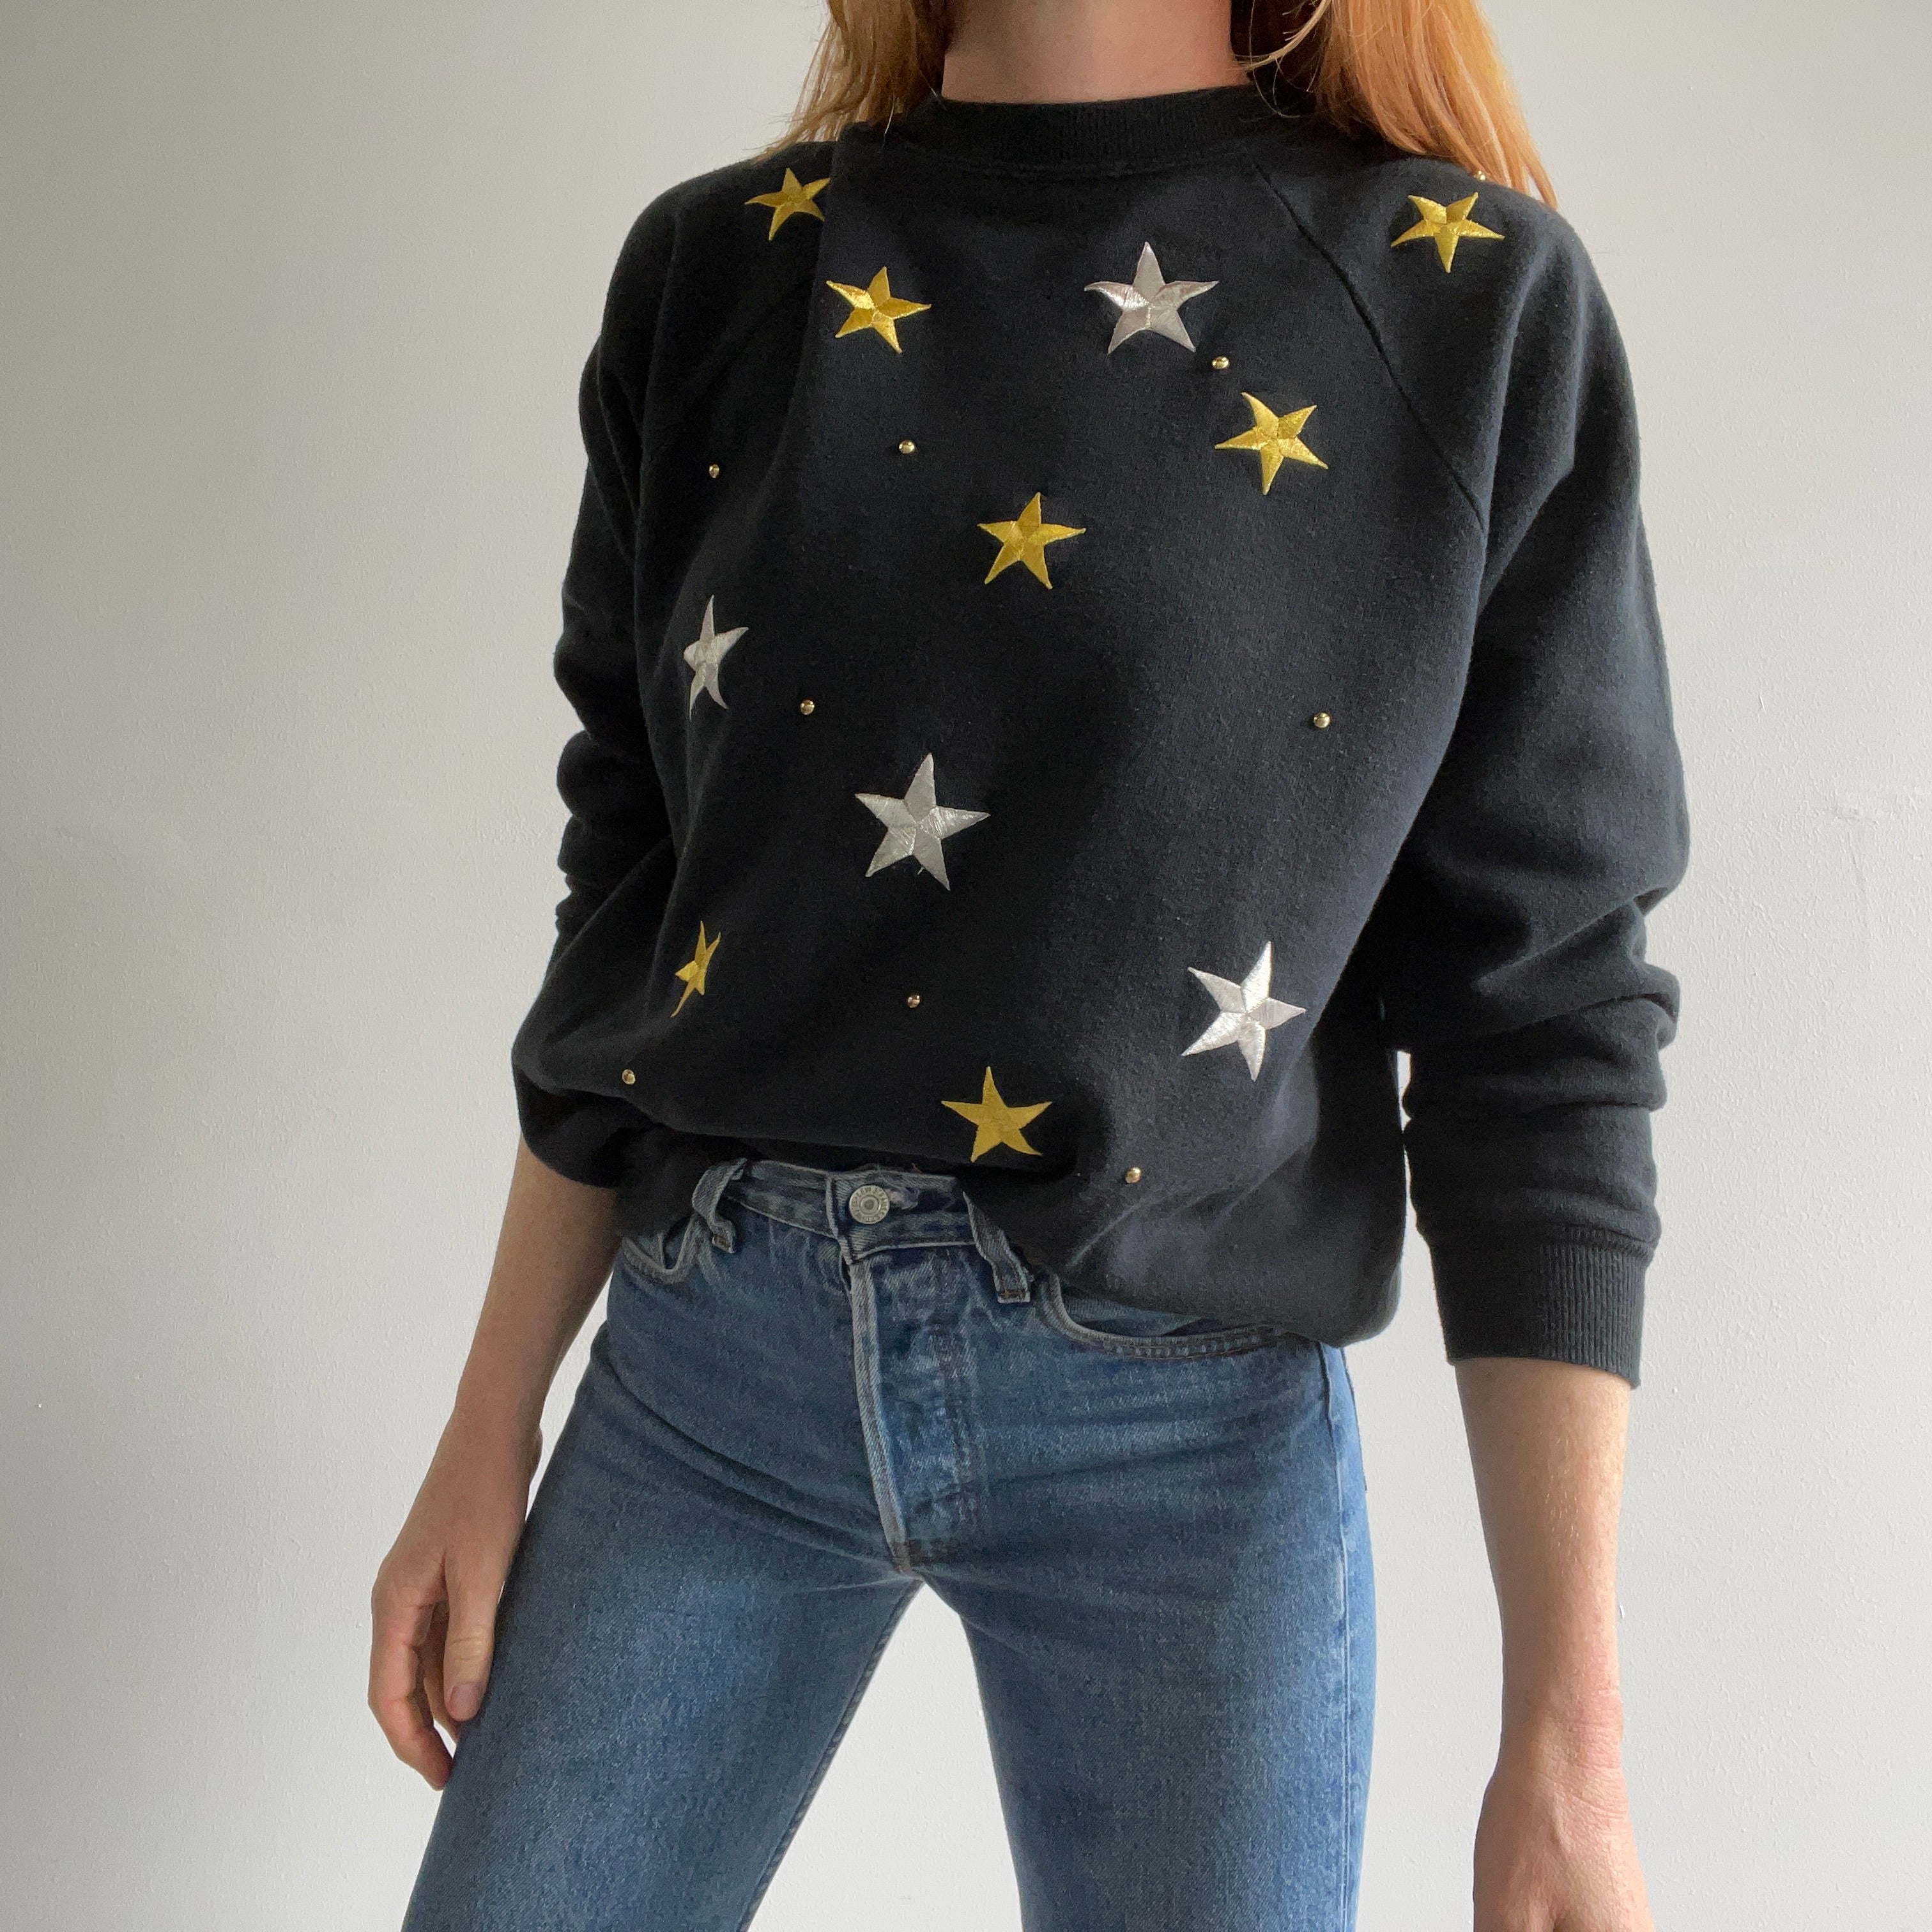 1980s Stars and Rivets Sweatshirt - Oh My!